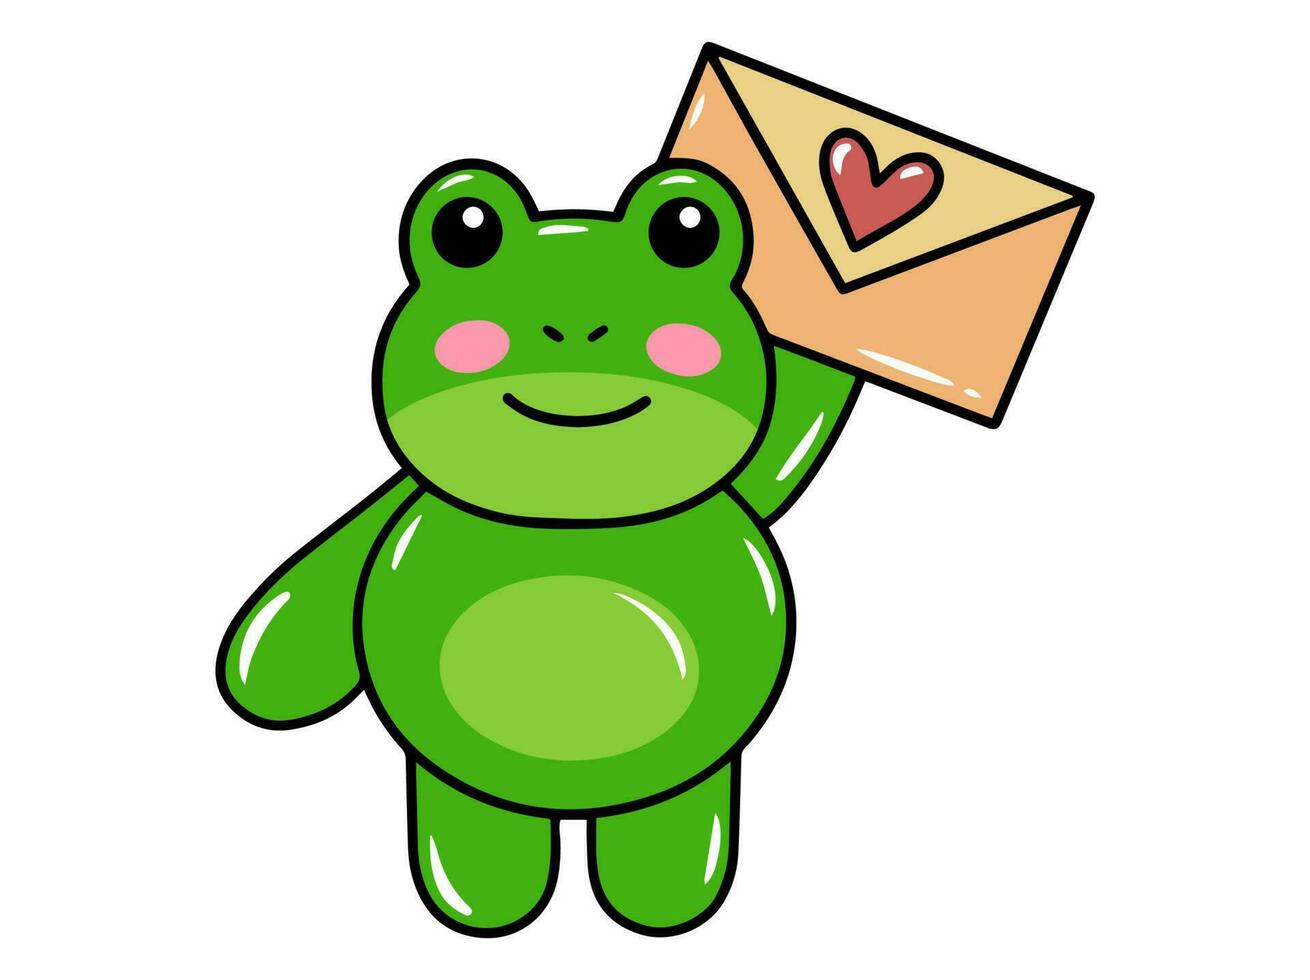 Cute cartoon Frog drawing illustration vector